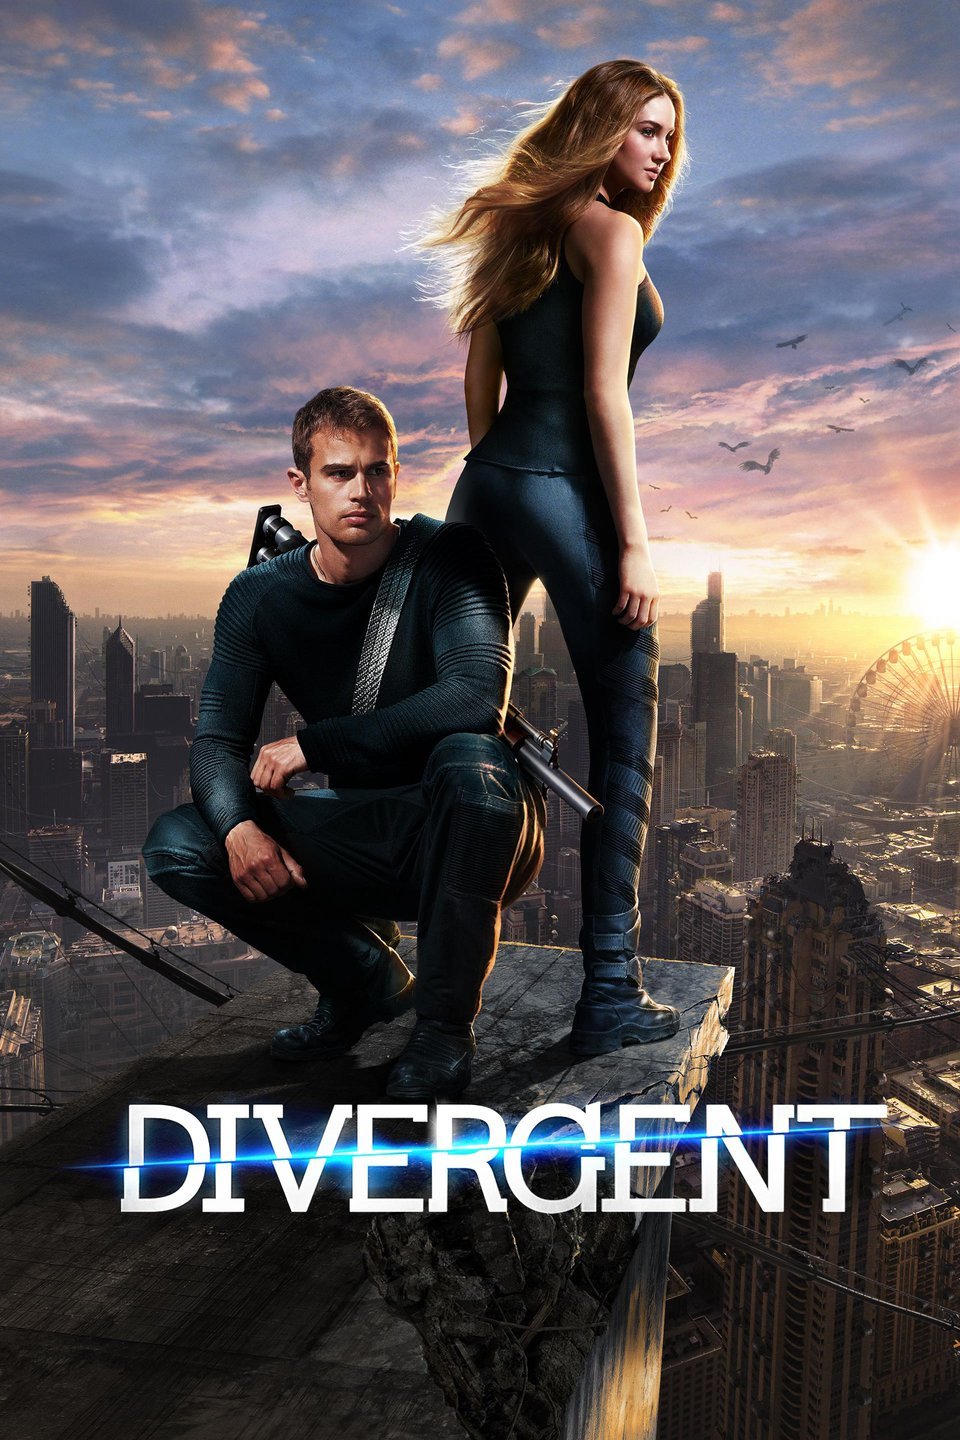 [MINI Super-HQ] Divergent (2014) ไดเวอร์เจนท์ คนแยกโลก ภาค 1 [1080p] [พากย์ไทย DTS + เสียงอังกฤษ DTS] [บรรยายไทย + อังกฤษ] [เสียงไทย + ซับไทย]